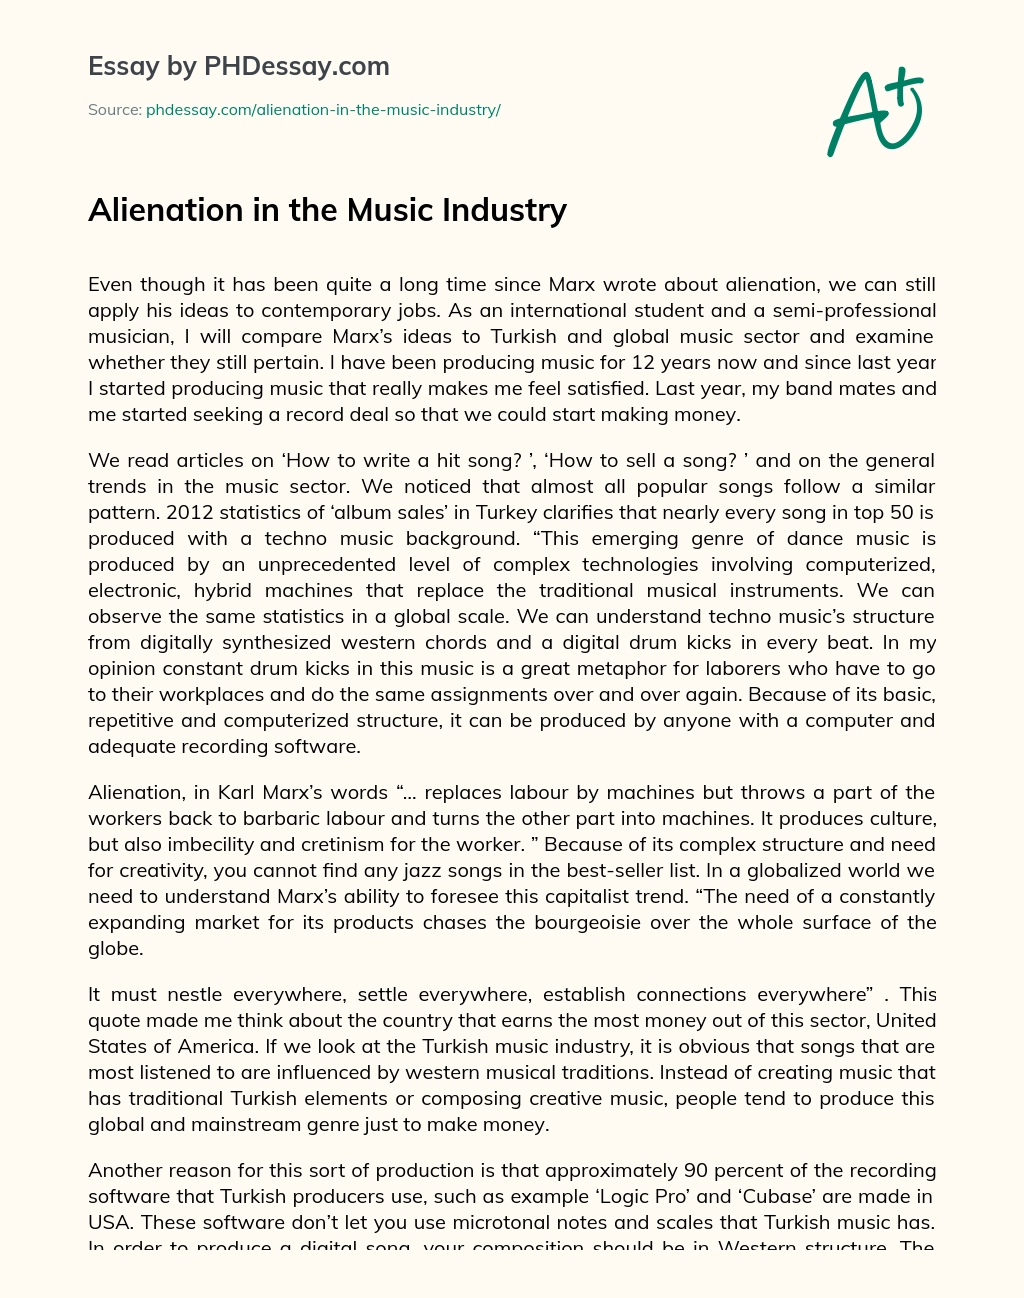 Alienation in the Music Industry essay